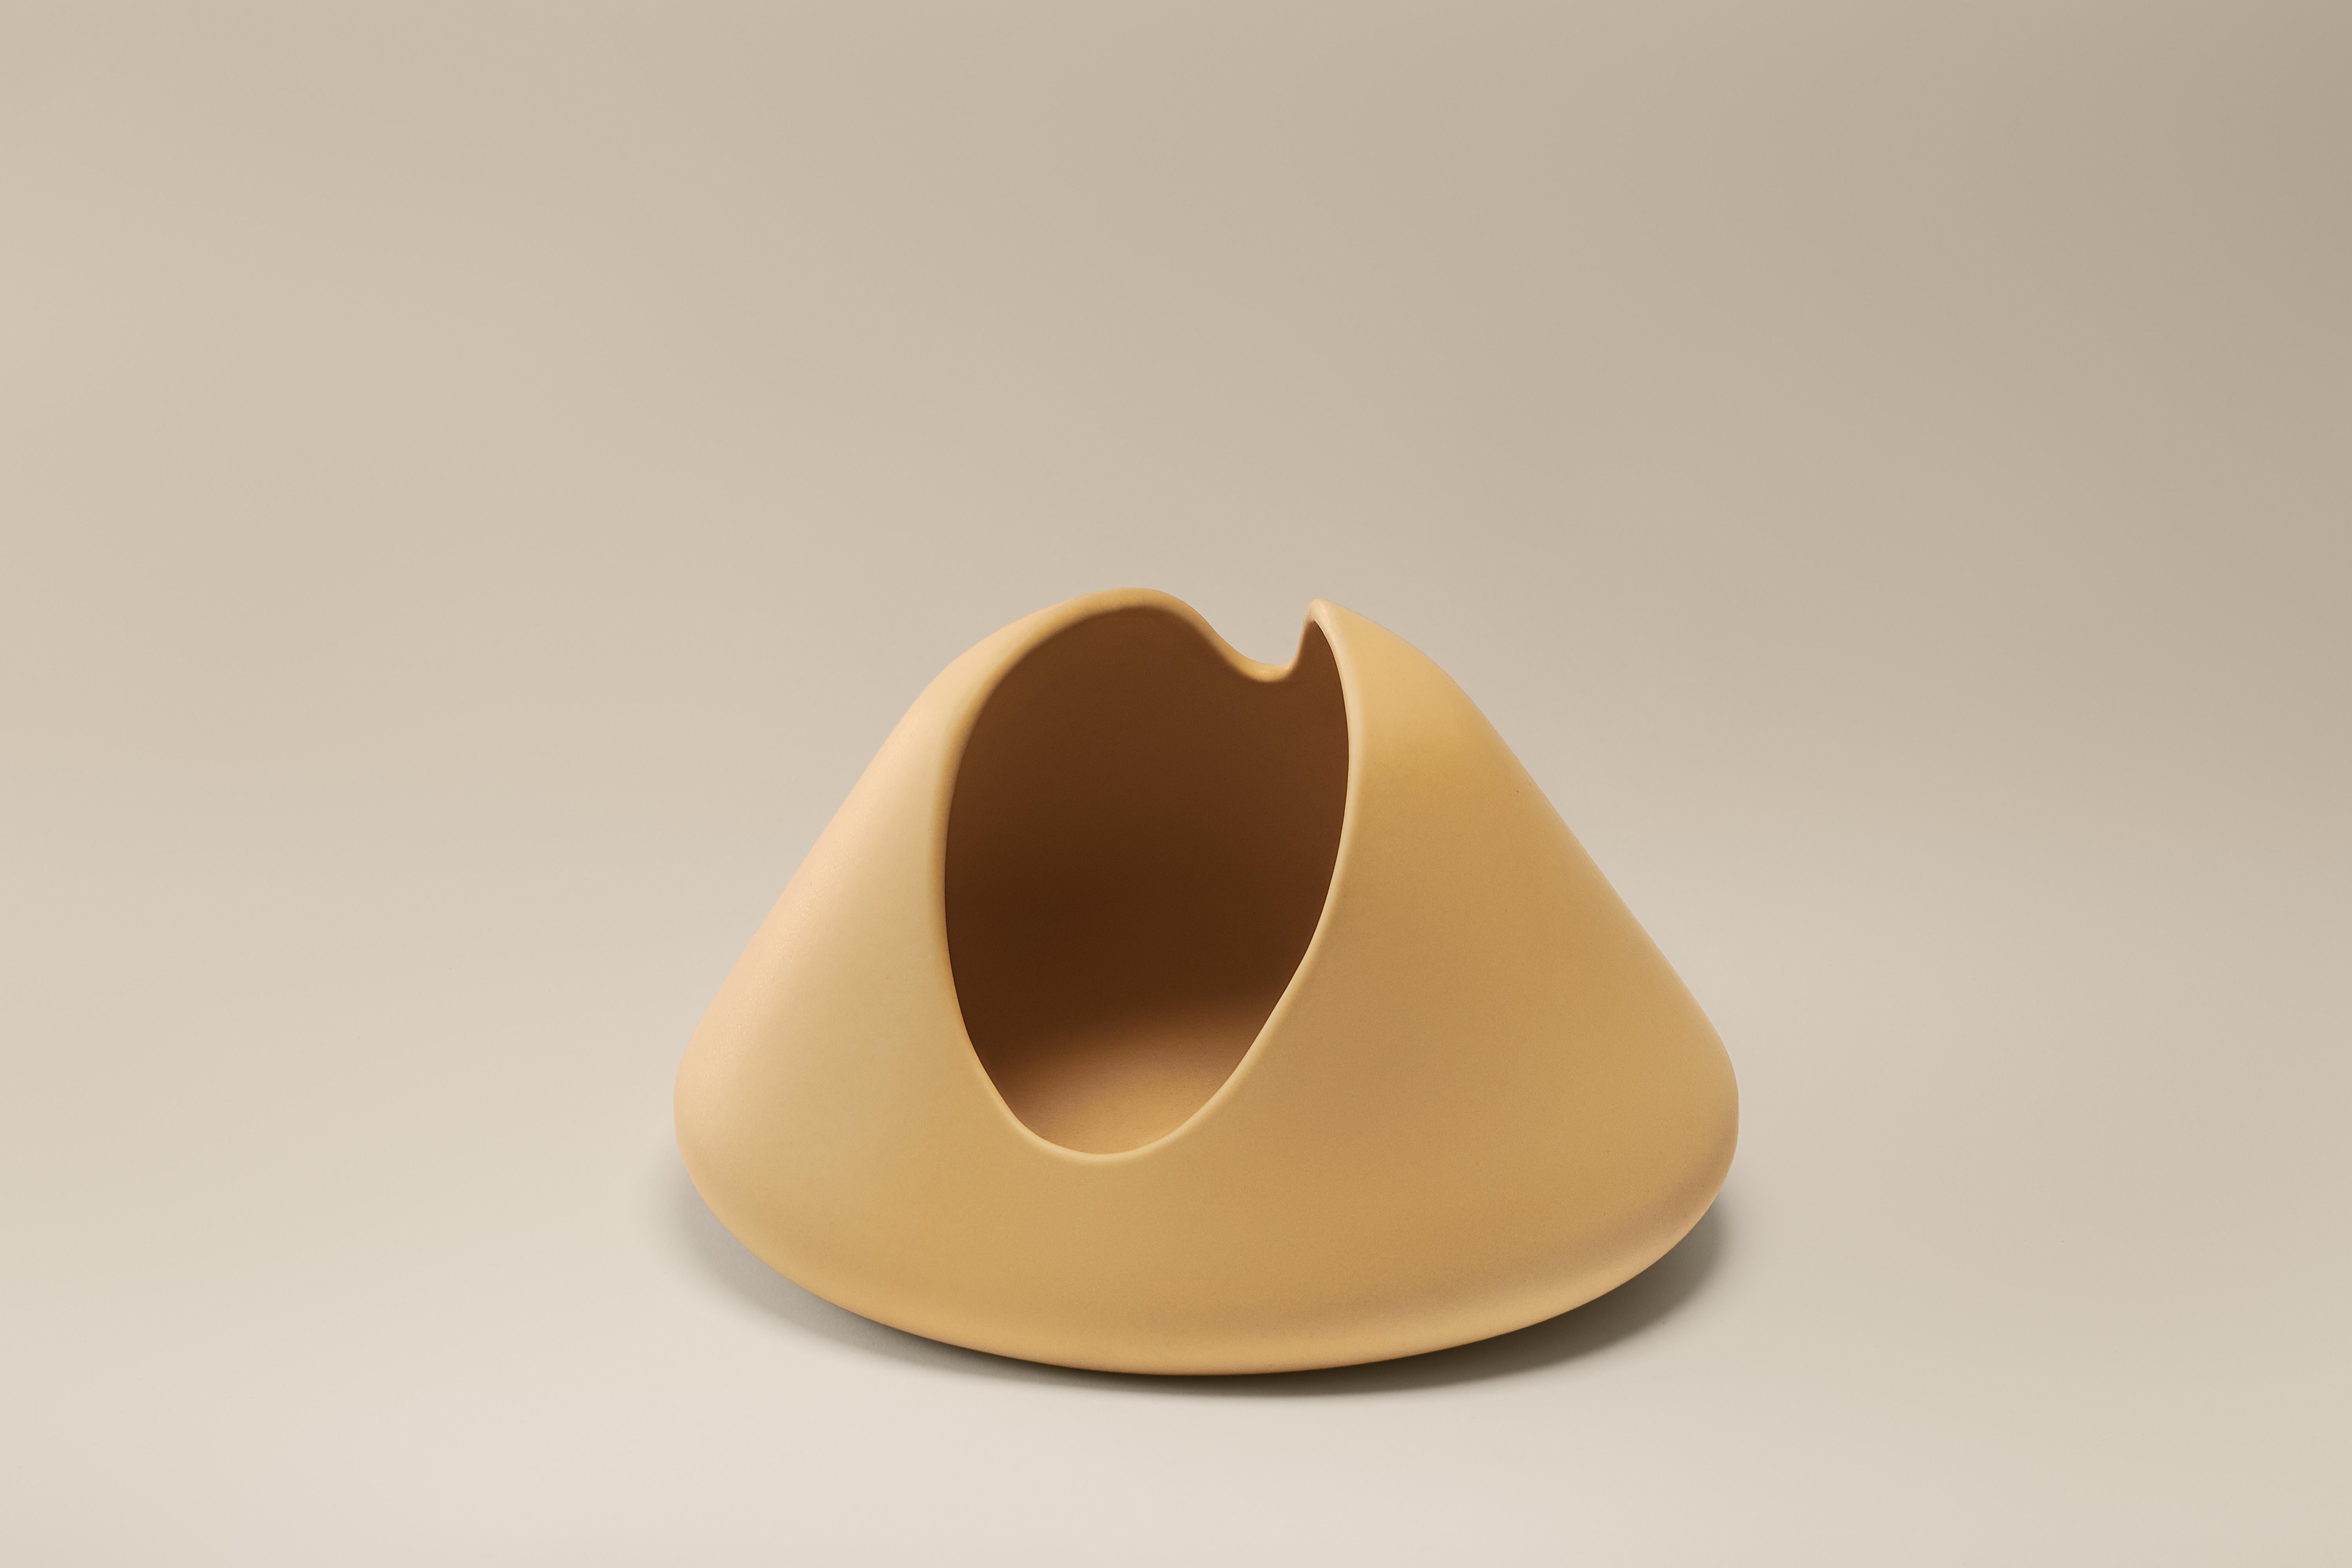 Boro vase by Lilia Cruz Corona Garduño
Dimensions: W 22.3 x D 19.5 x H 13 cm
Materials: High-temperature ceramics (Stoneware) and vitrified glaze

Platalea studio was born out of a passion for both art and design. We love how both are so